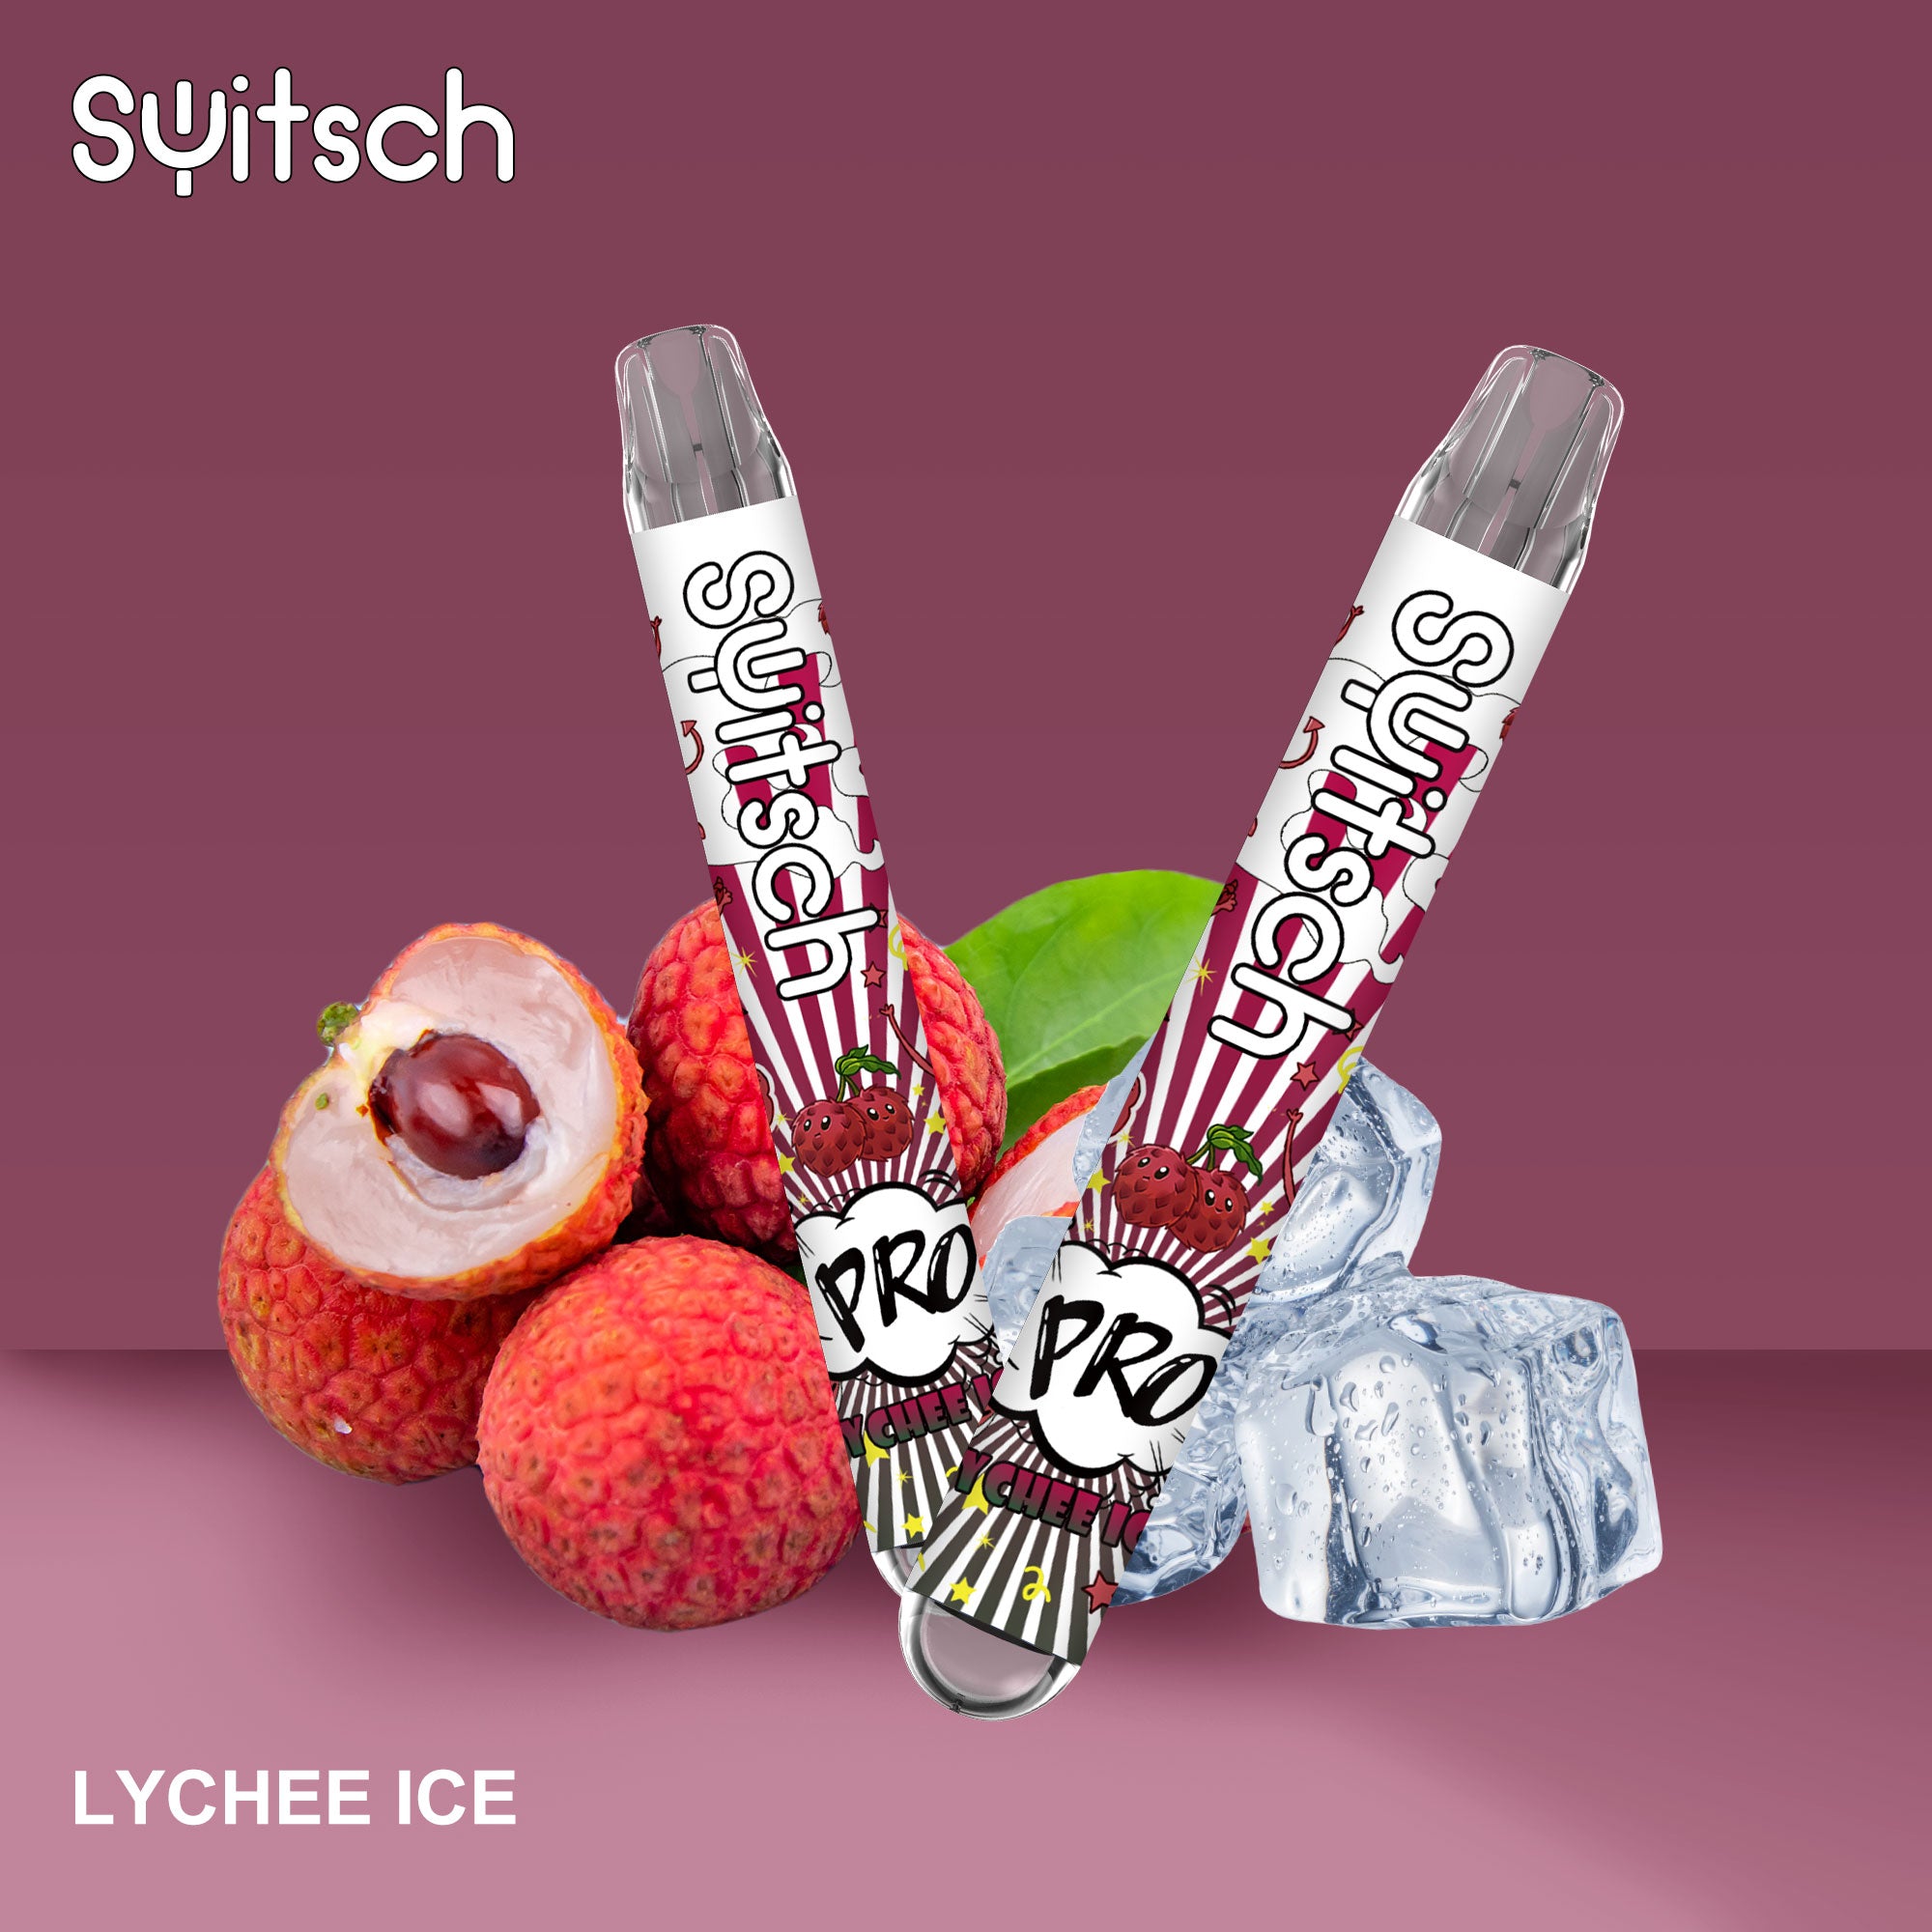 Lychee Ice - Puff Pro 2%